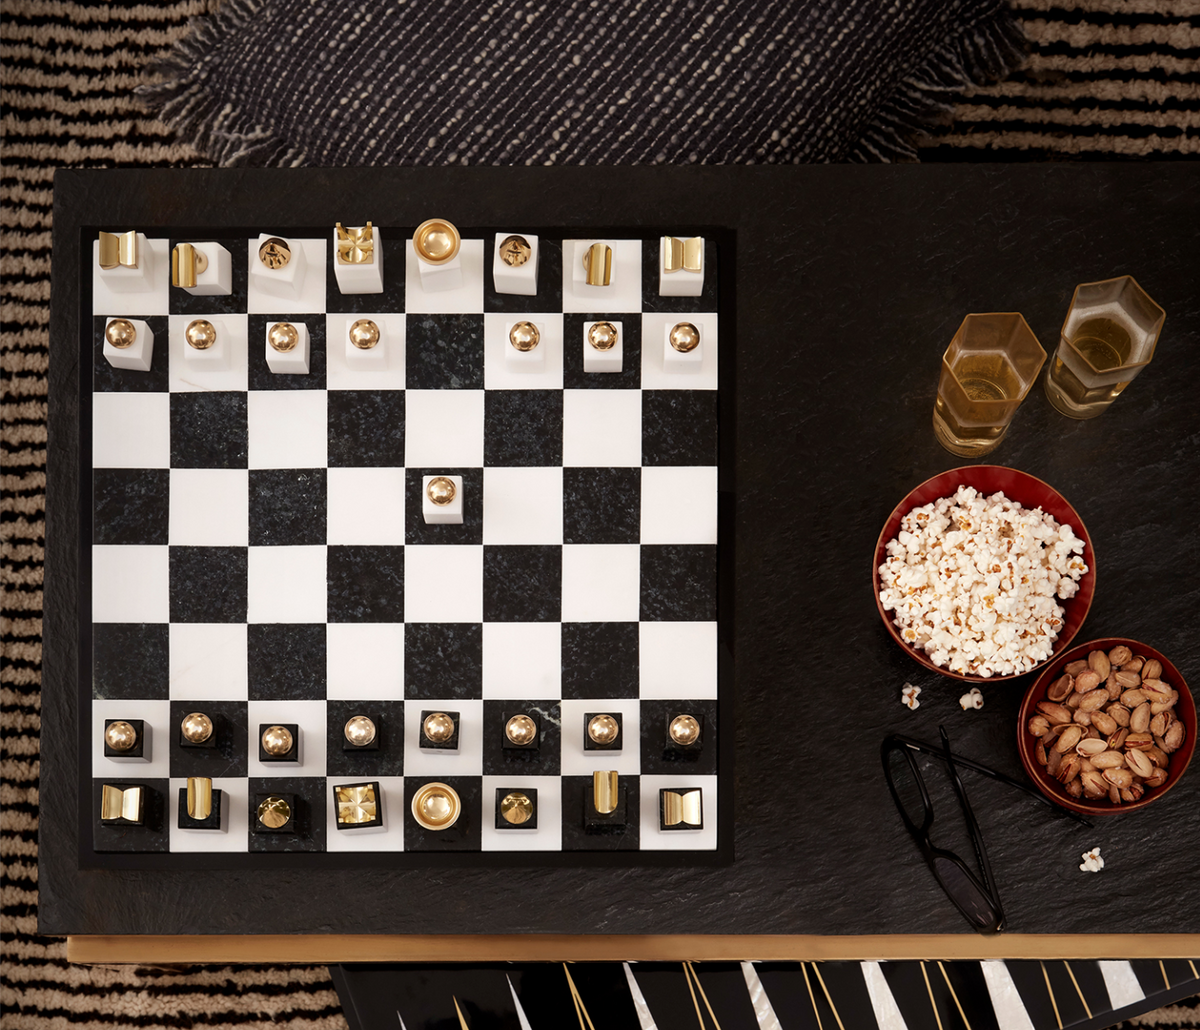 L'Objet Chess Set